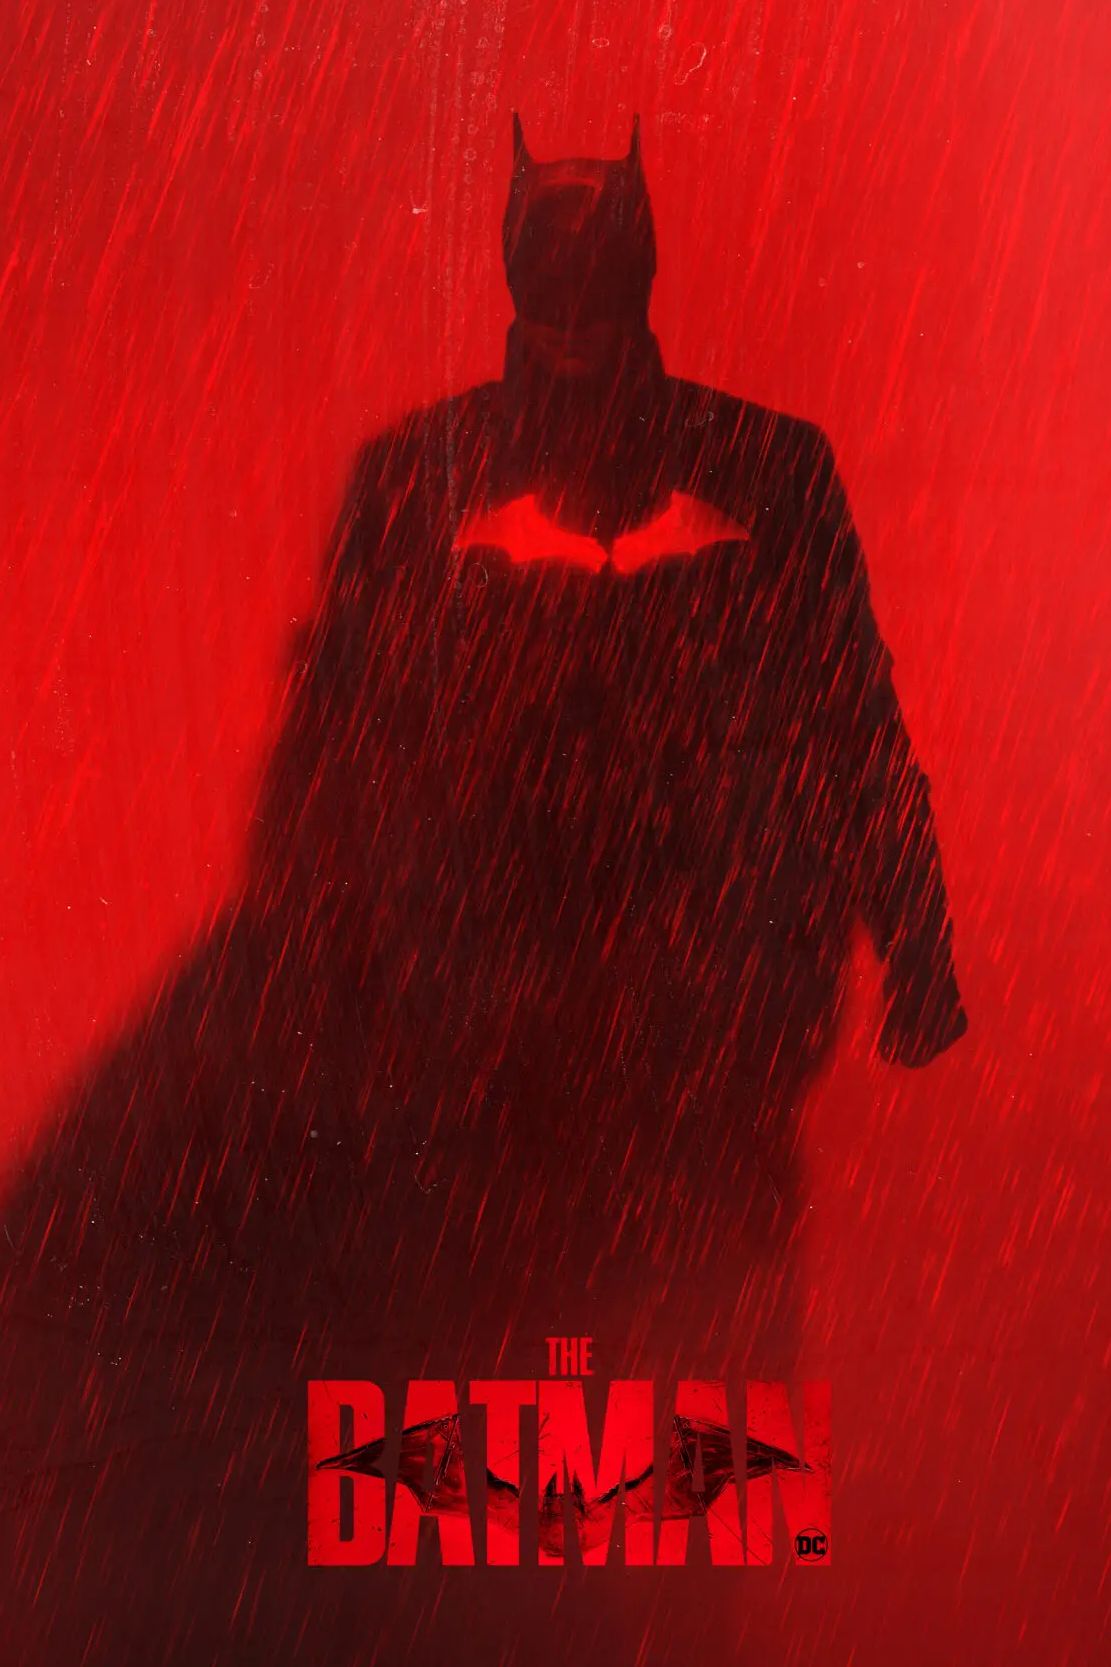 Temporary Batman 2 poster